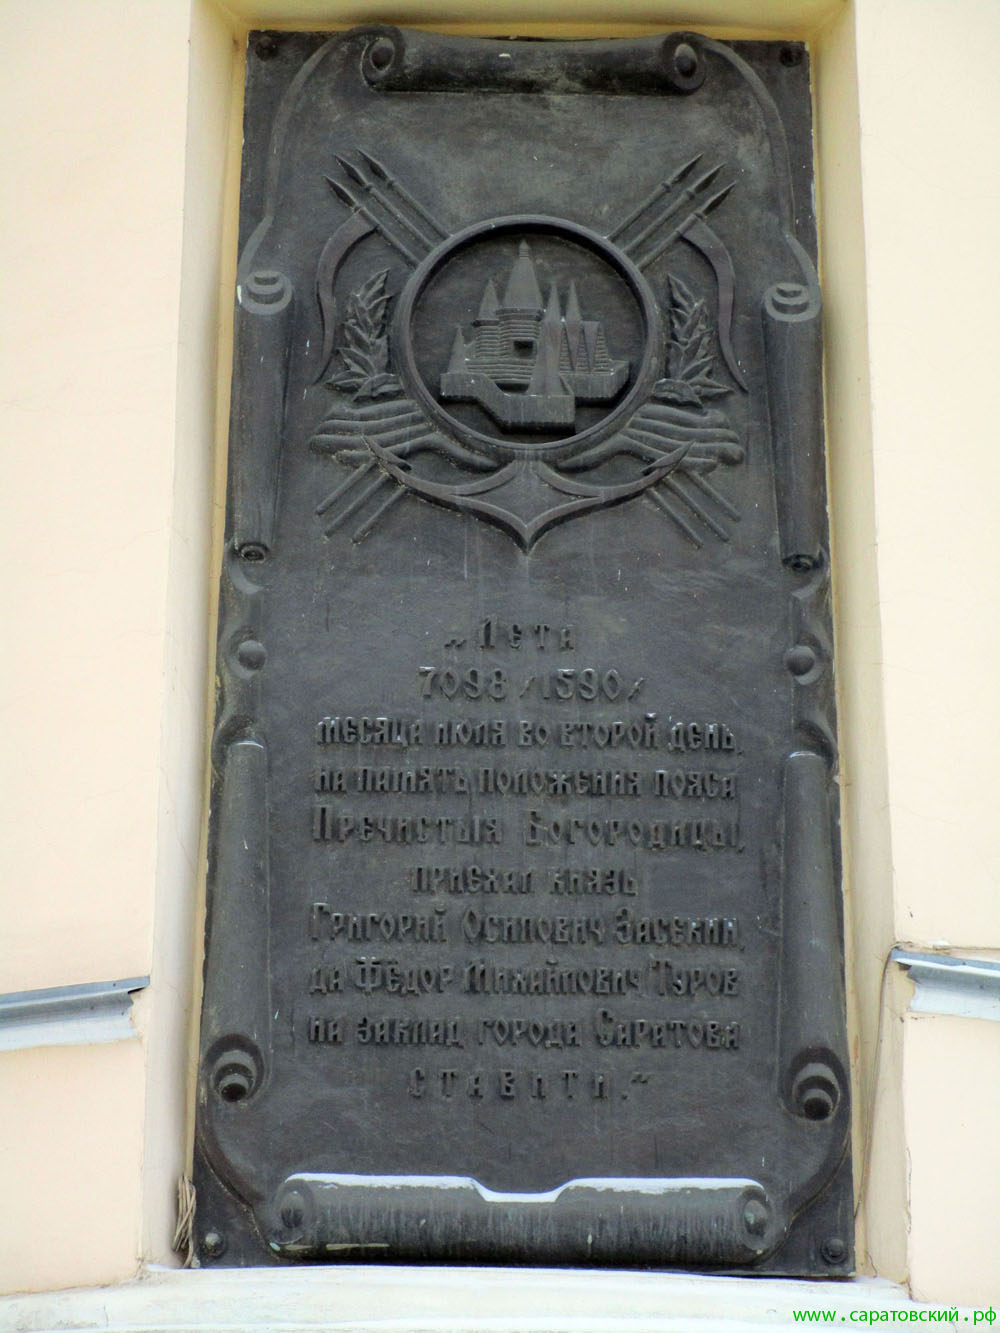 Saratov foundation memorial plaque, Russia